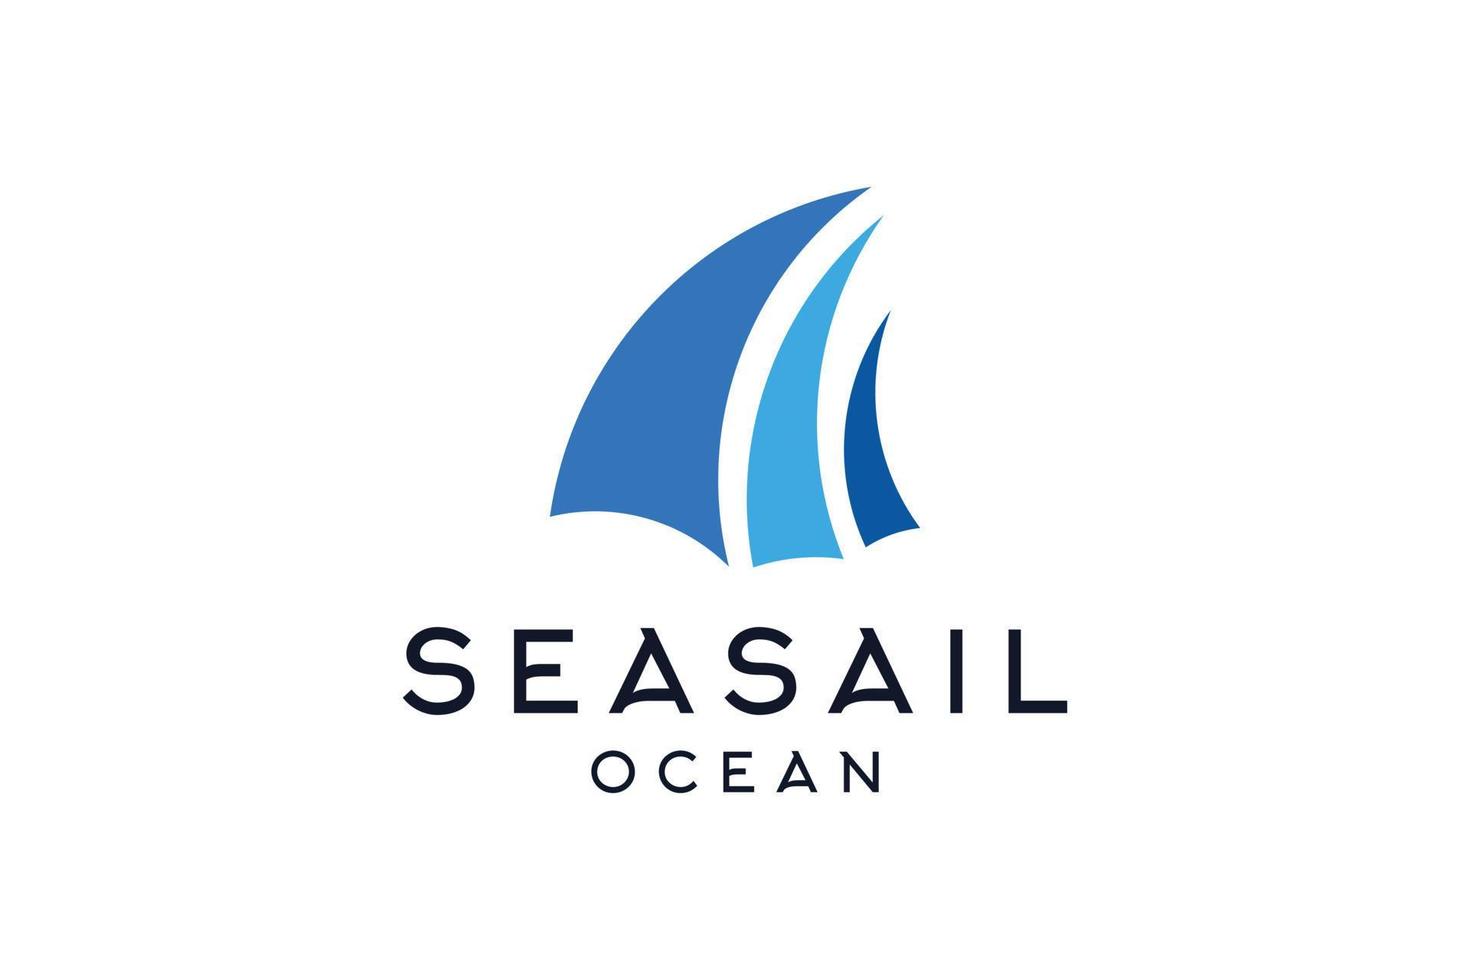 Blue sail boat logo design vector